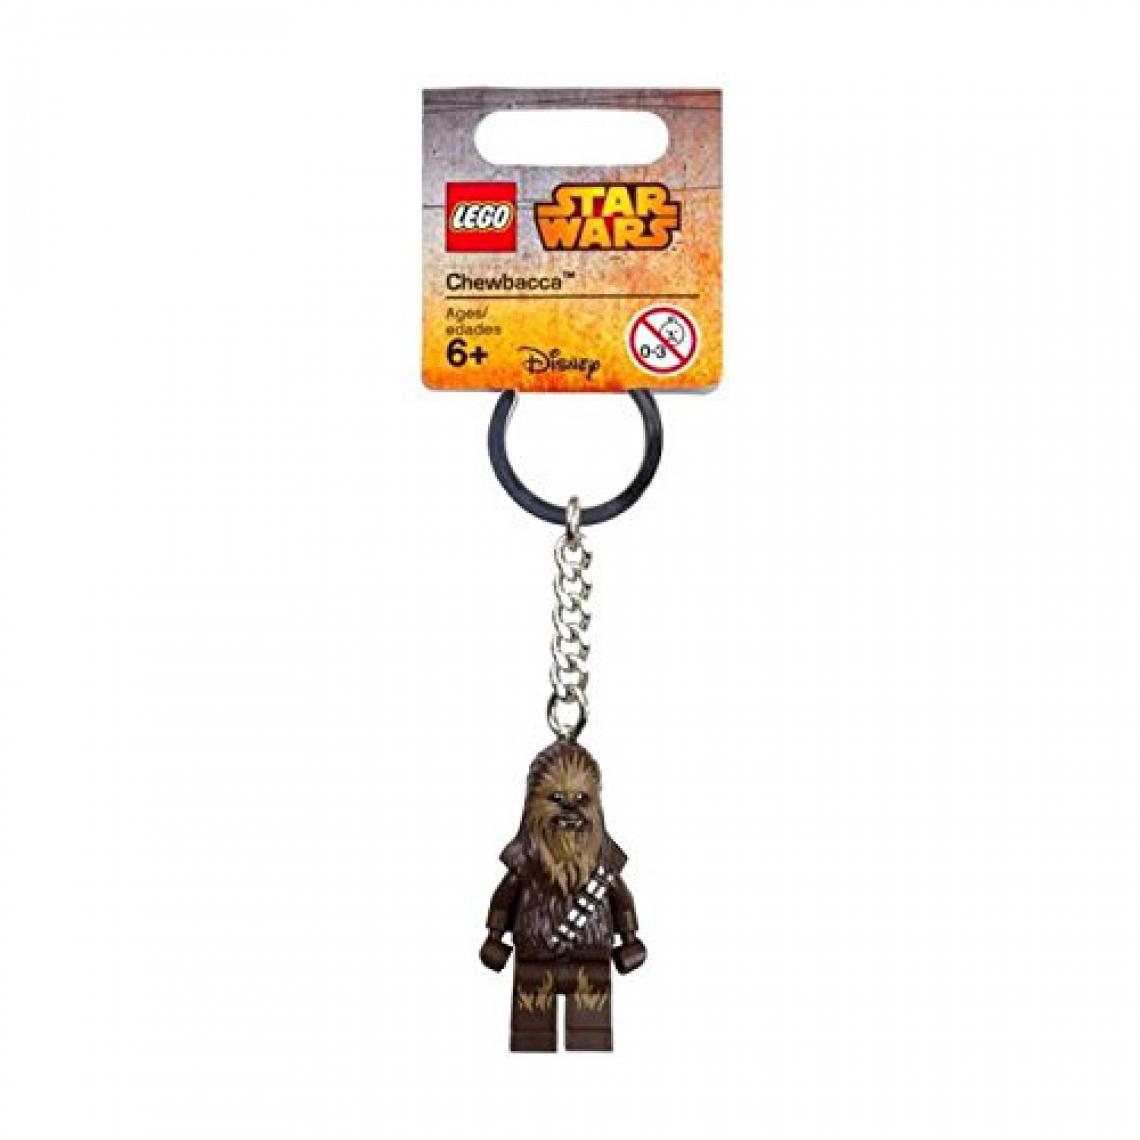 Lego - Porte-clés Chewbacca Lego Star Wars - Briques et blocs